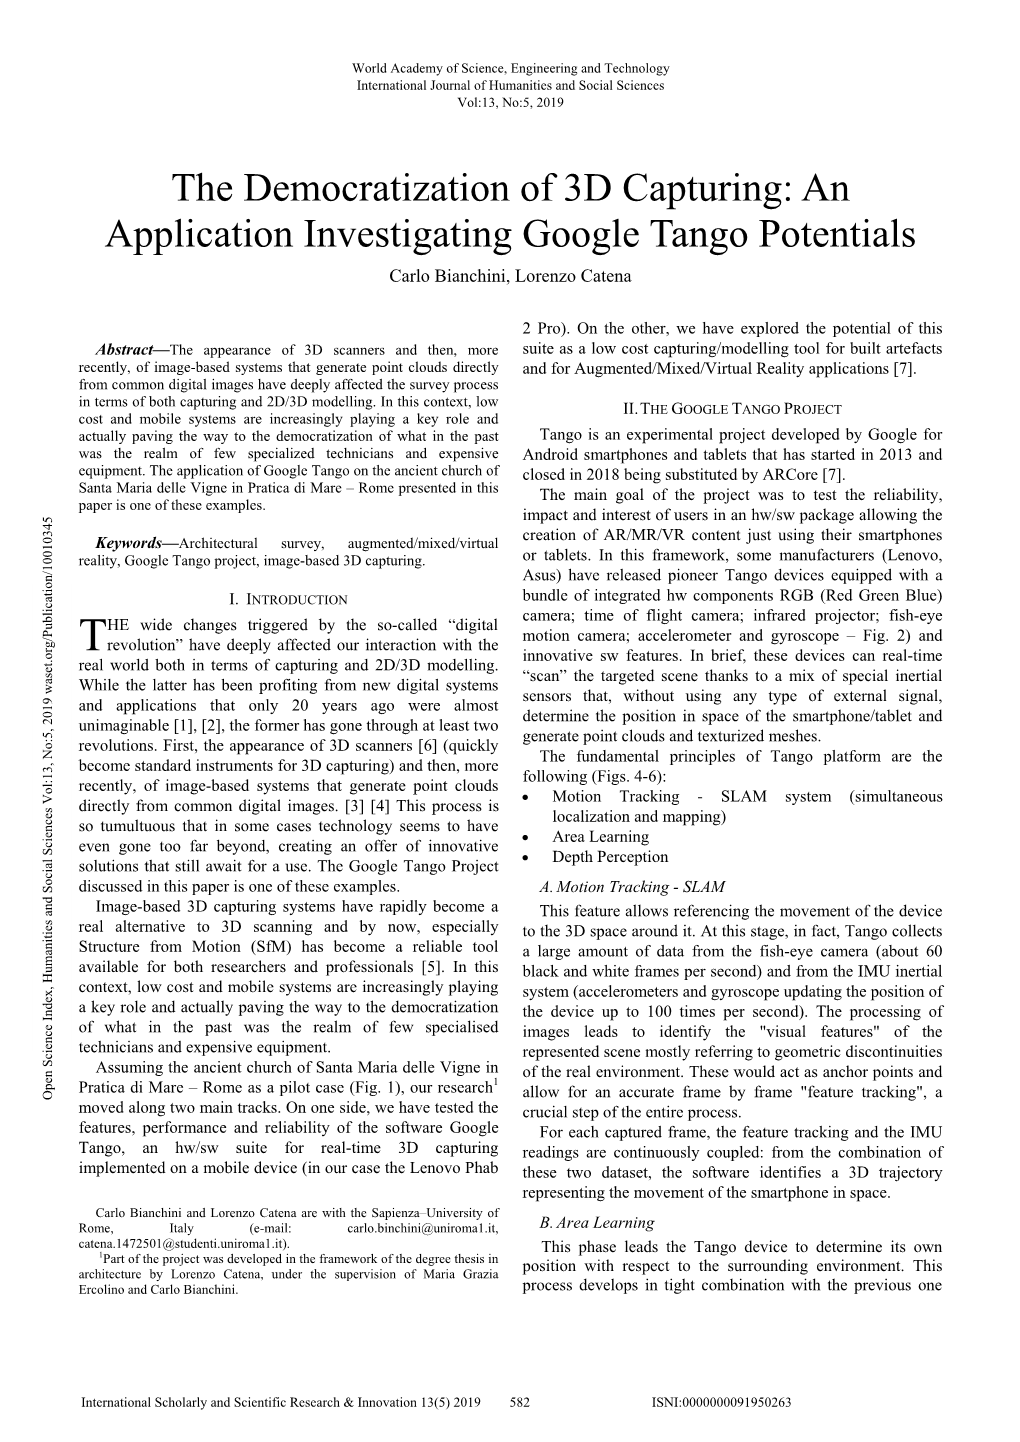 The Democratization of 3D Capturing: an Application Investigating Google Tango Potentials Carlo Bianchini, Lorenzo Catena